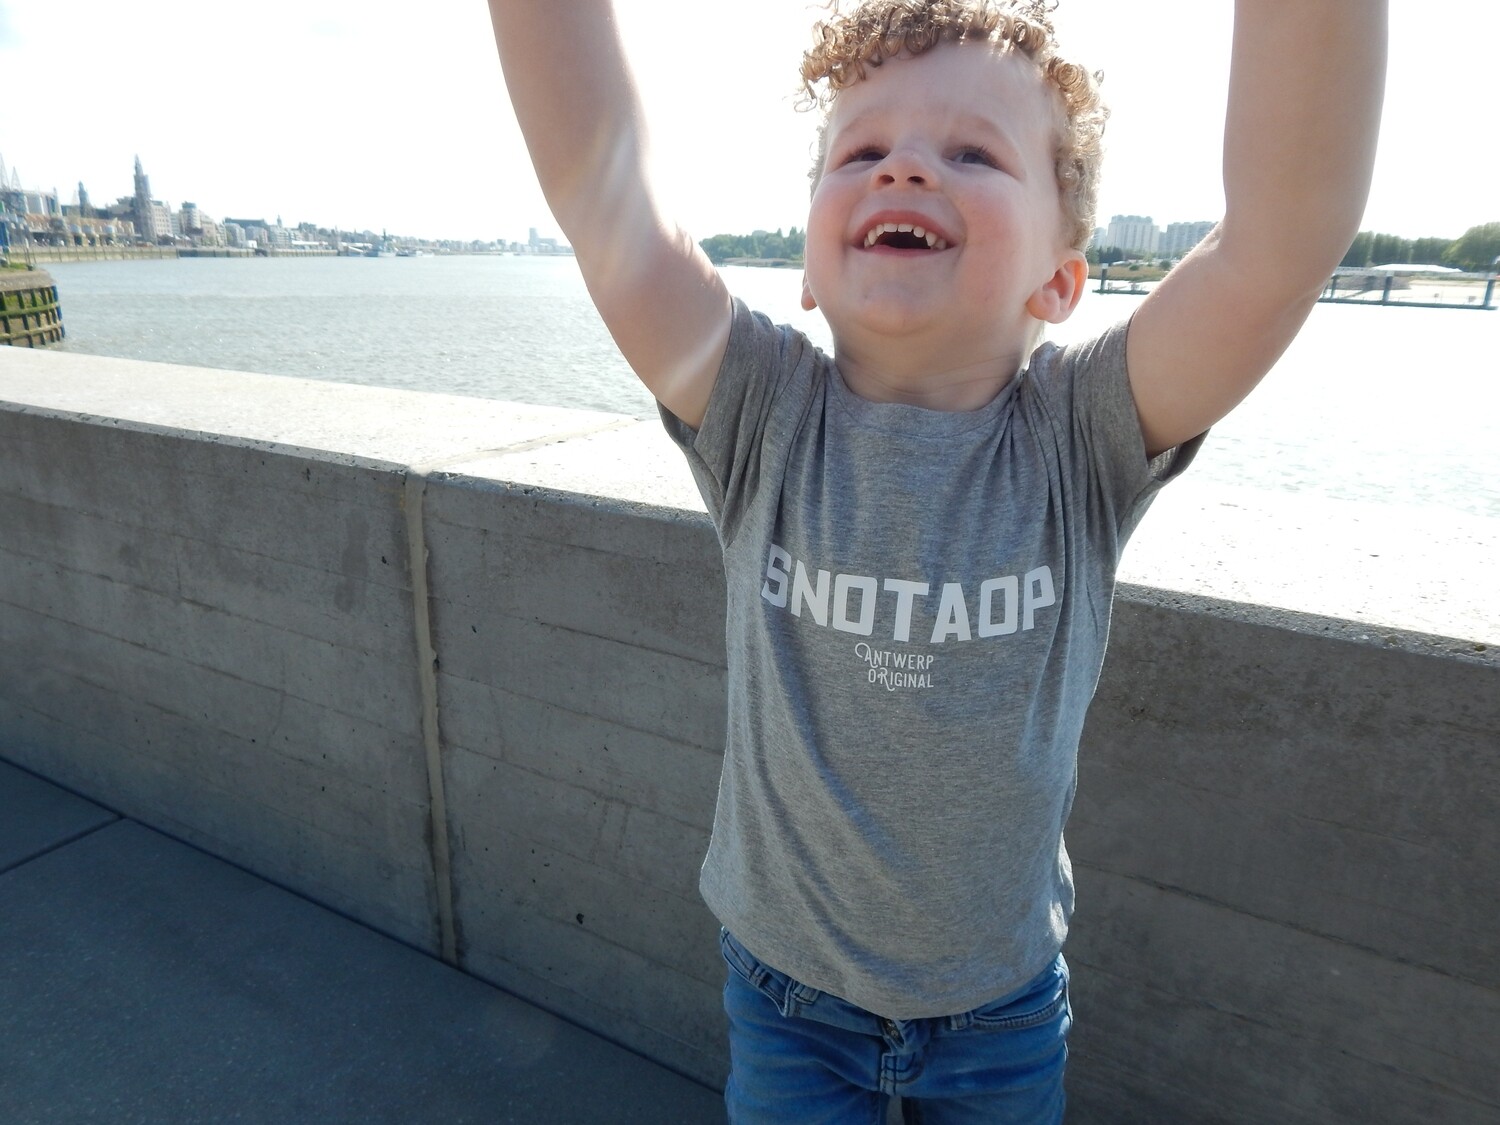 Snotaop - Kids T-Shirt